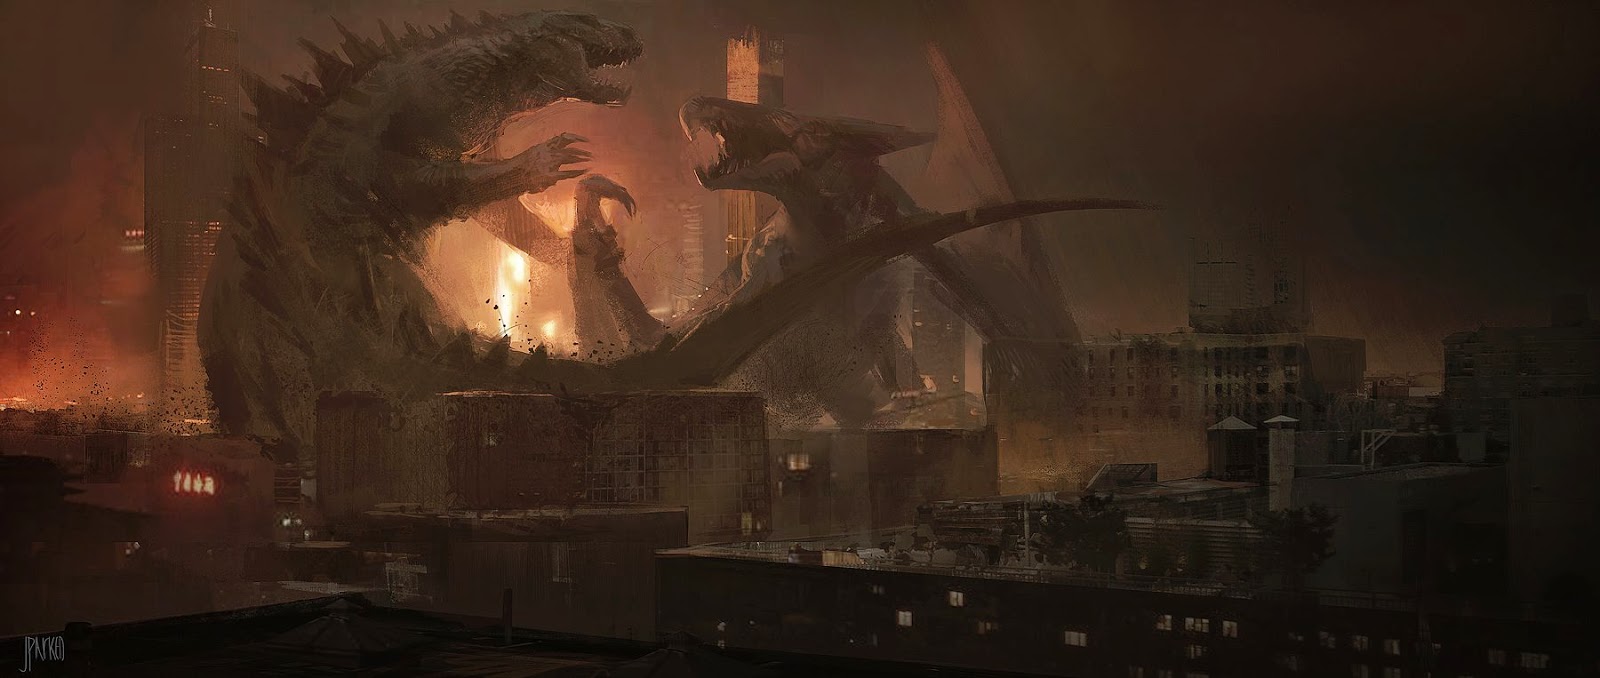 Godzilla_Concept_Art_John_Park_01.jpg